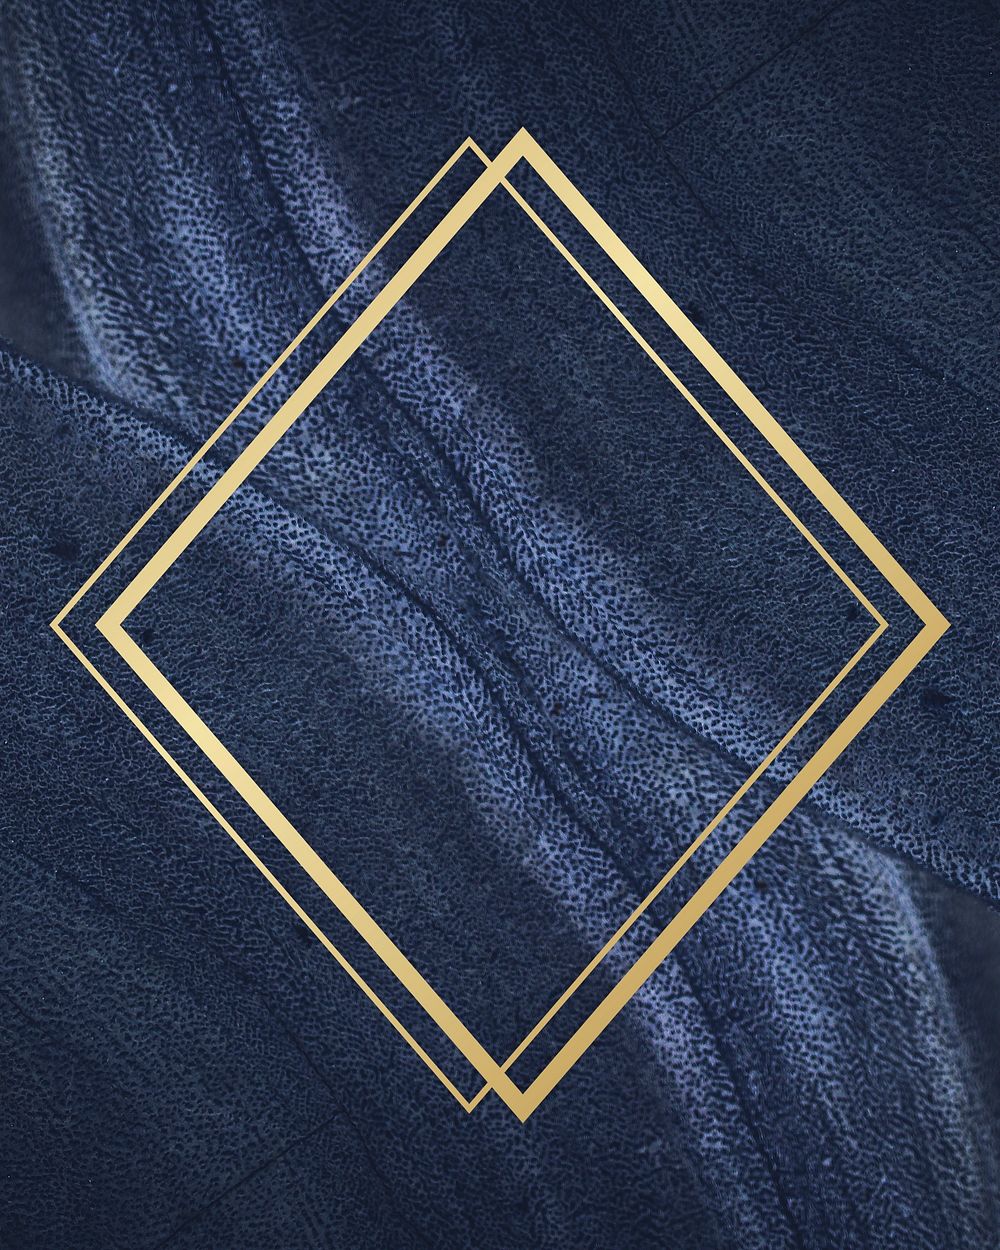 Golden framed rhombus on a blue textured stone